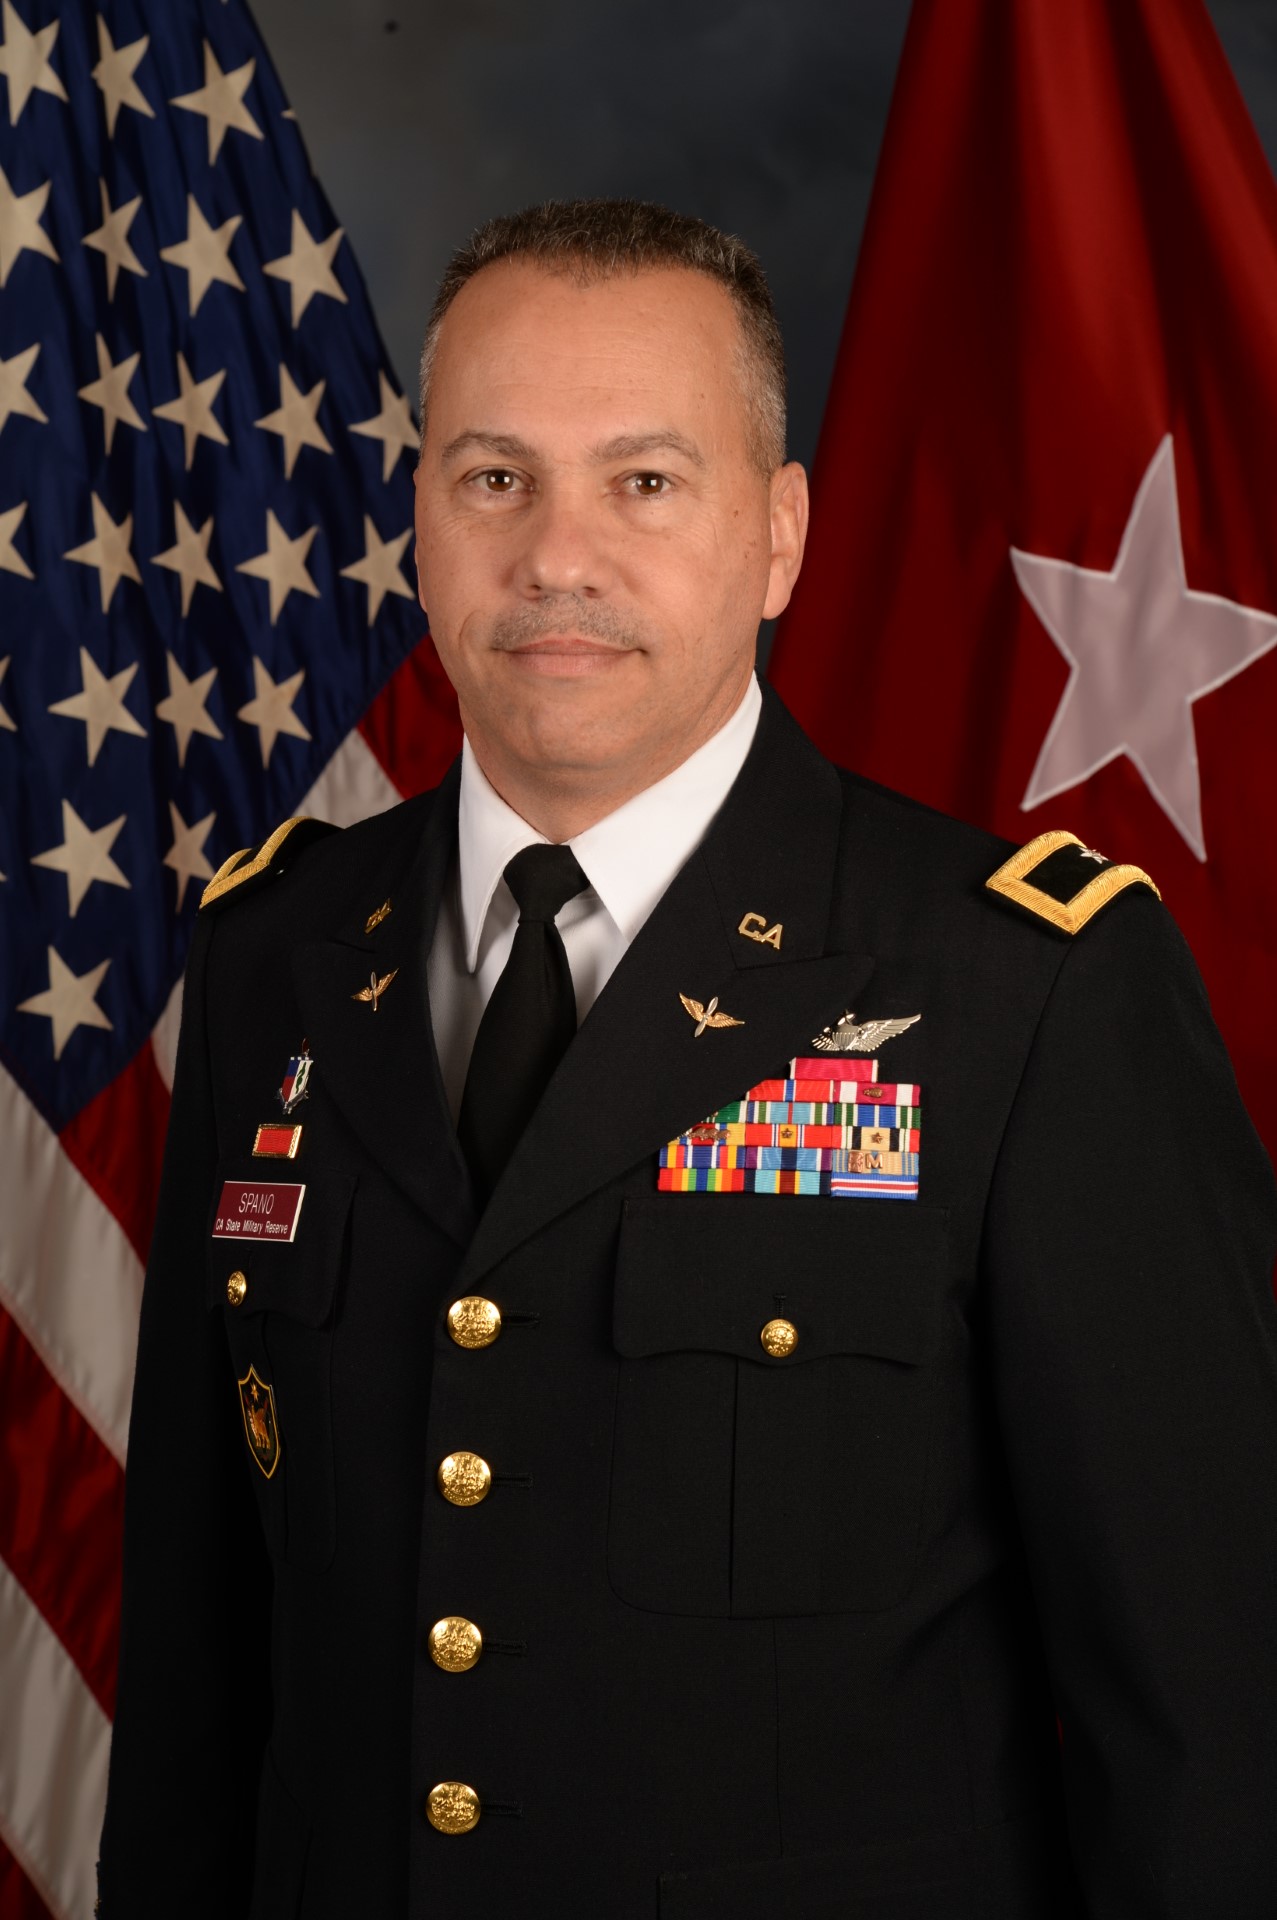 Brigadier General Robert A. Spano